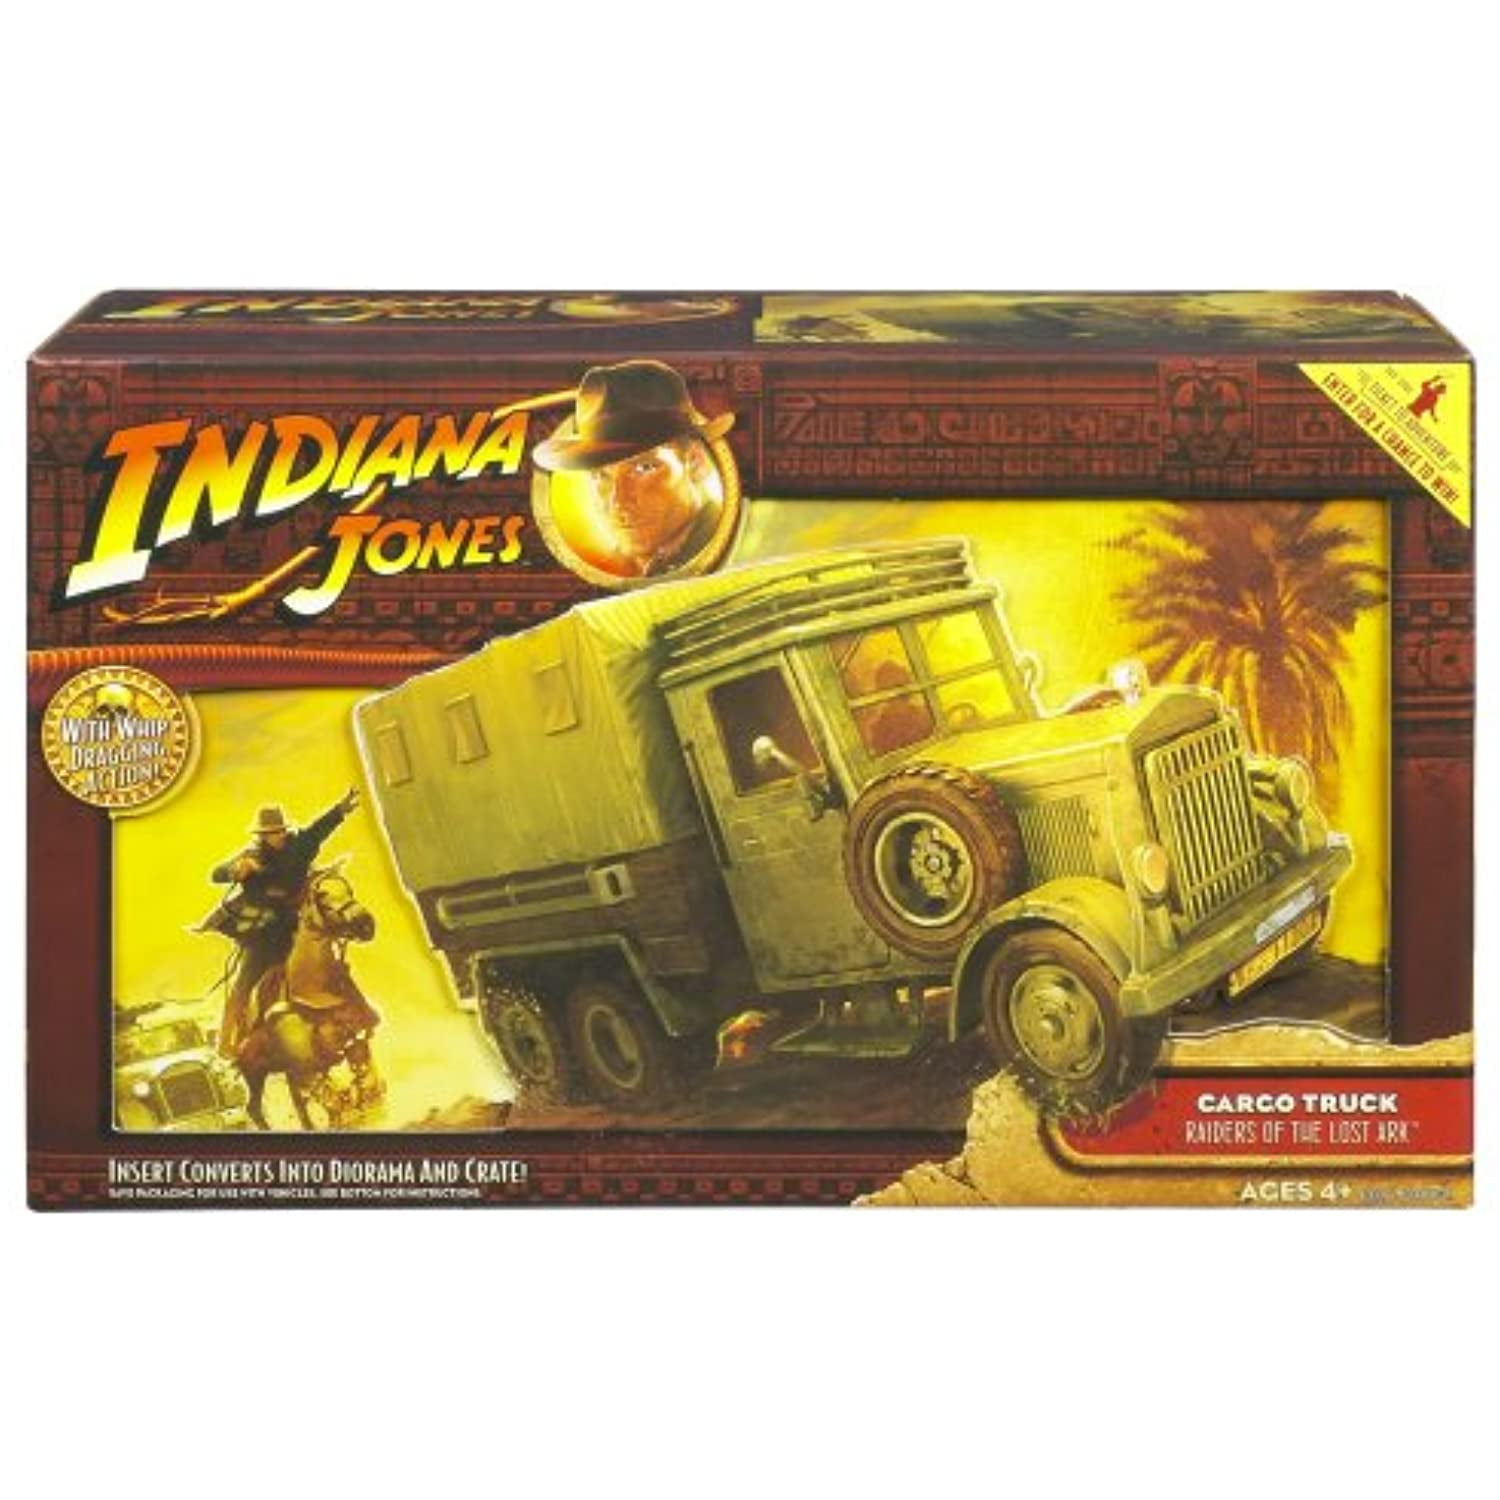 Indiana Jones Raiders The Lost Ark Cargo Truck 